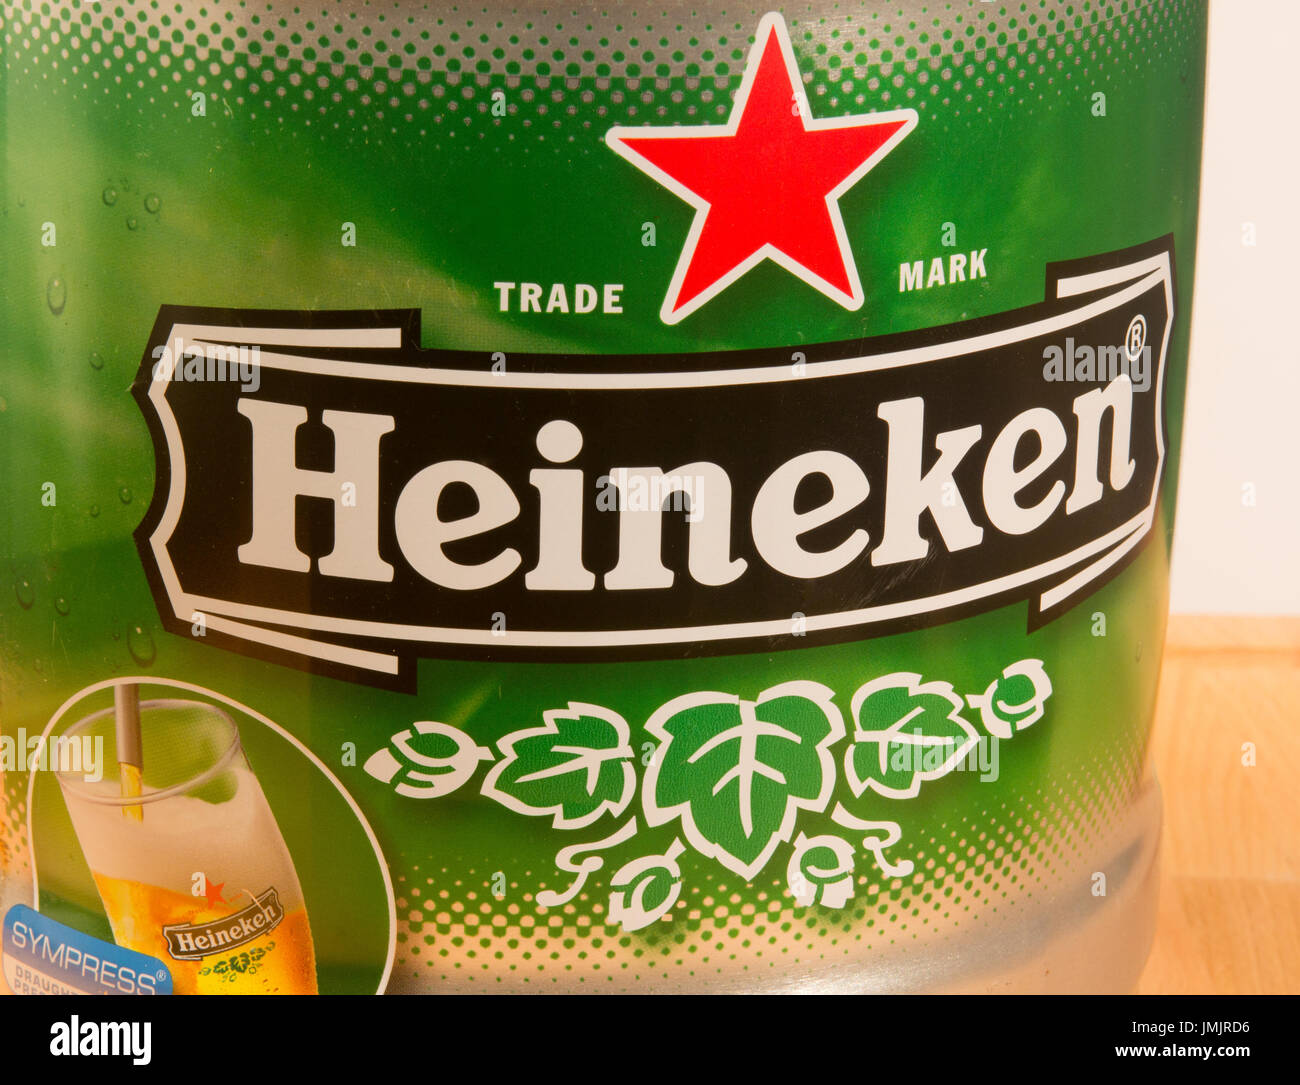 Heineken Bier Fass Stockfotografie - Alamy